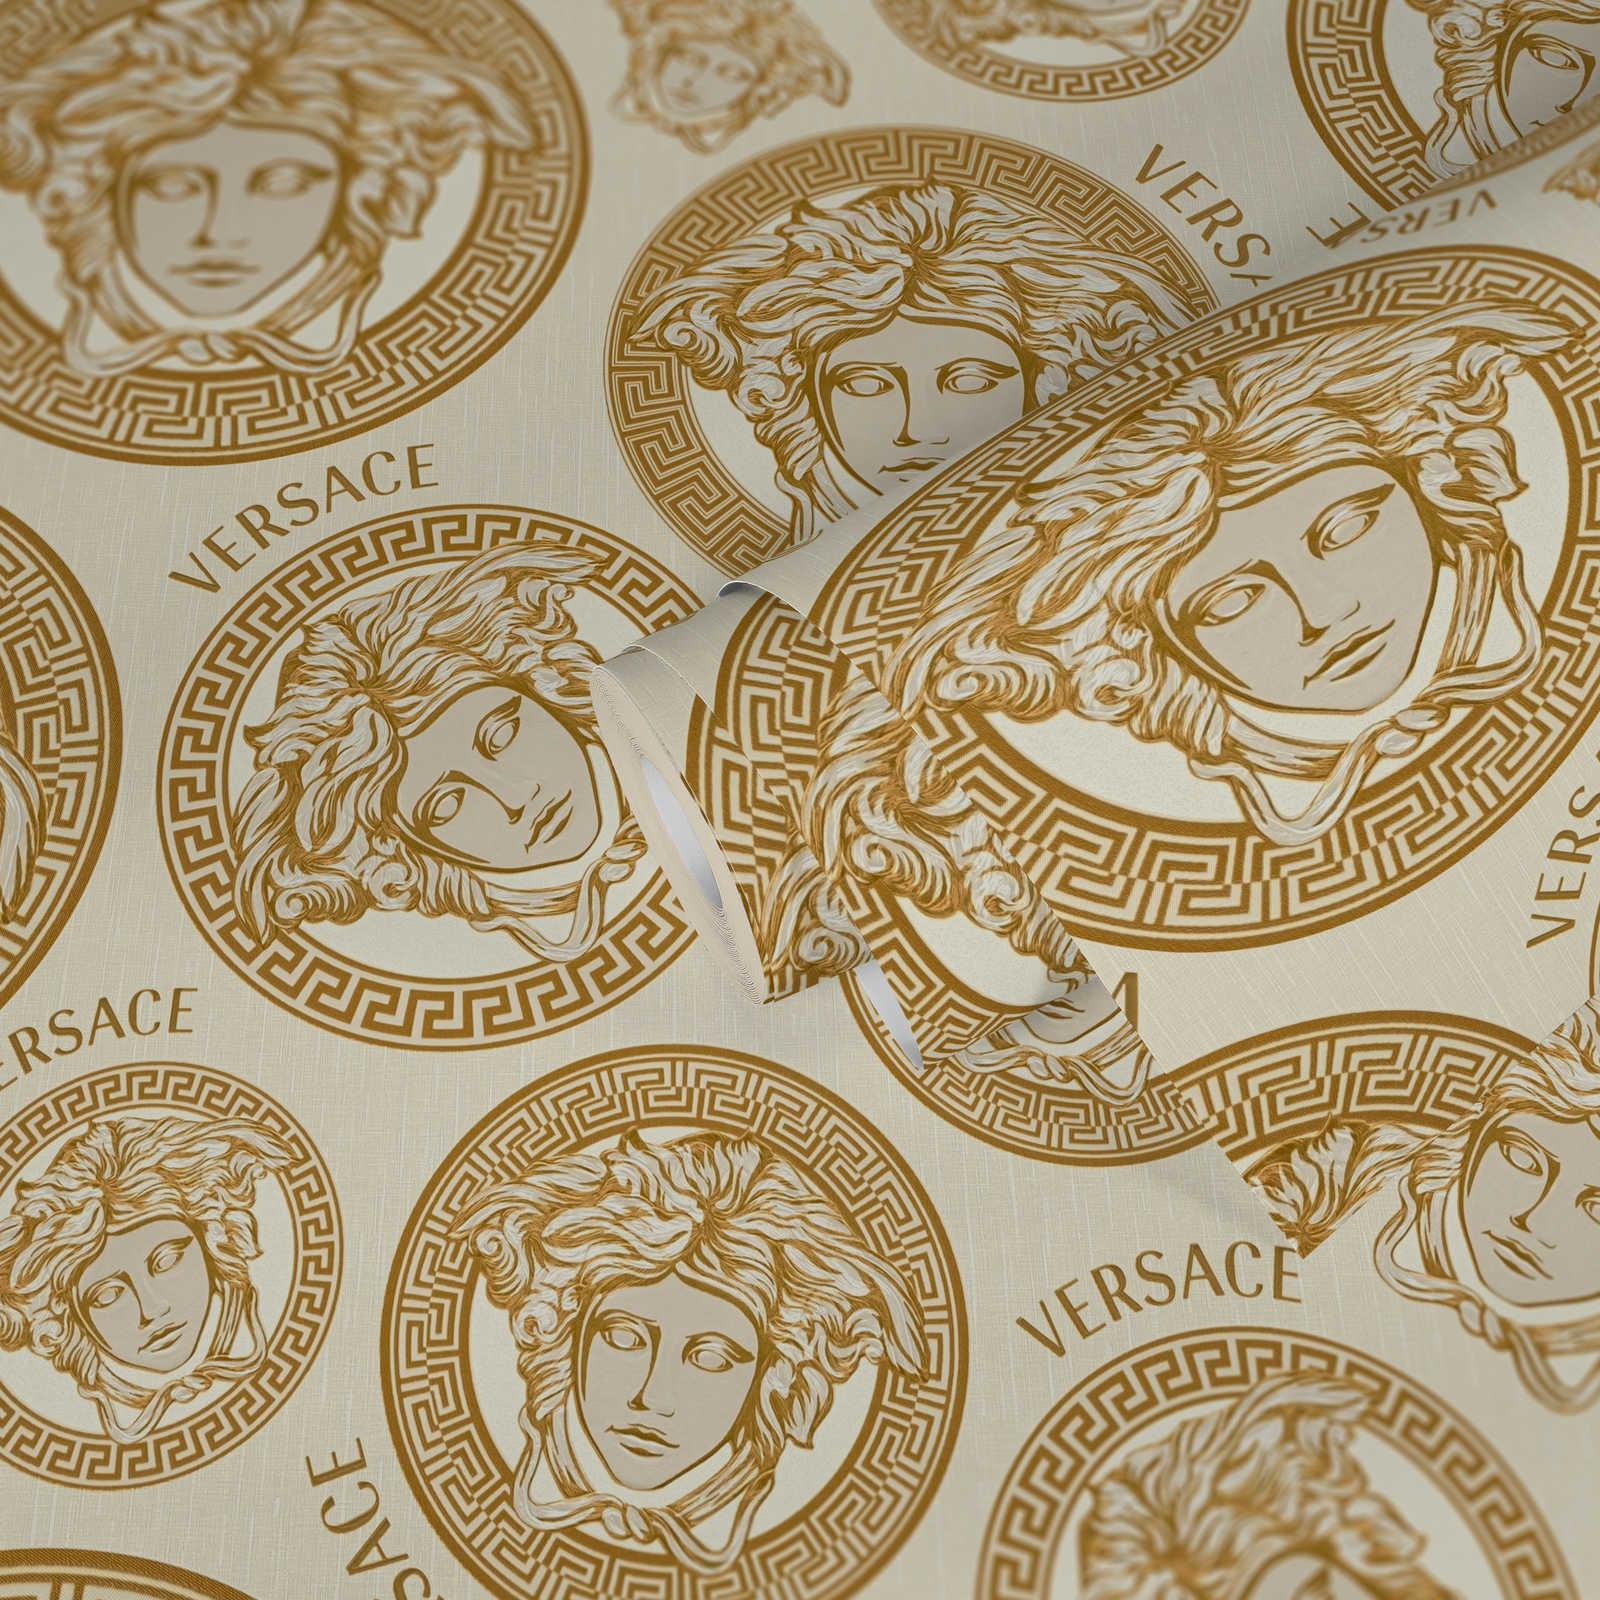             VERSACE Tapete Gold Design mit Medusa Emblem – Creme
        